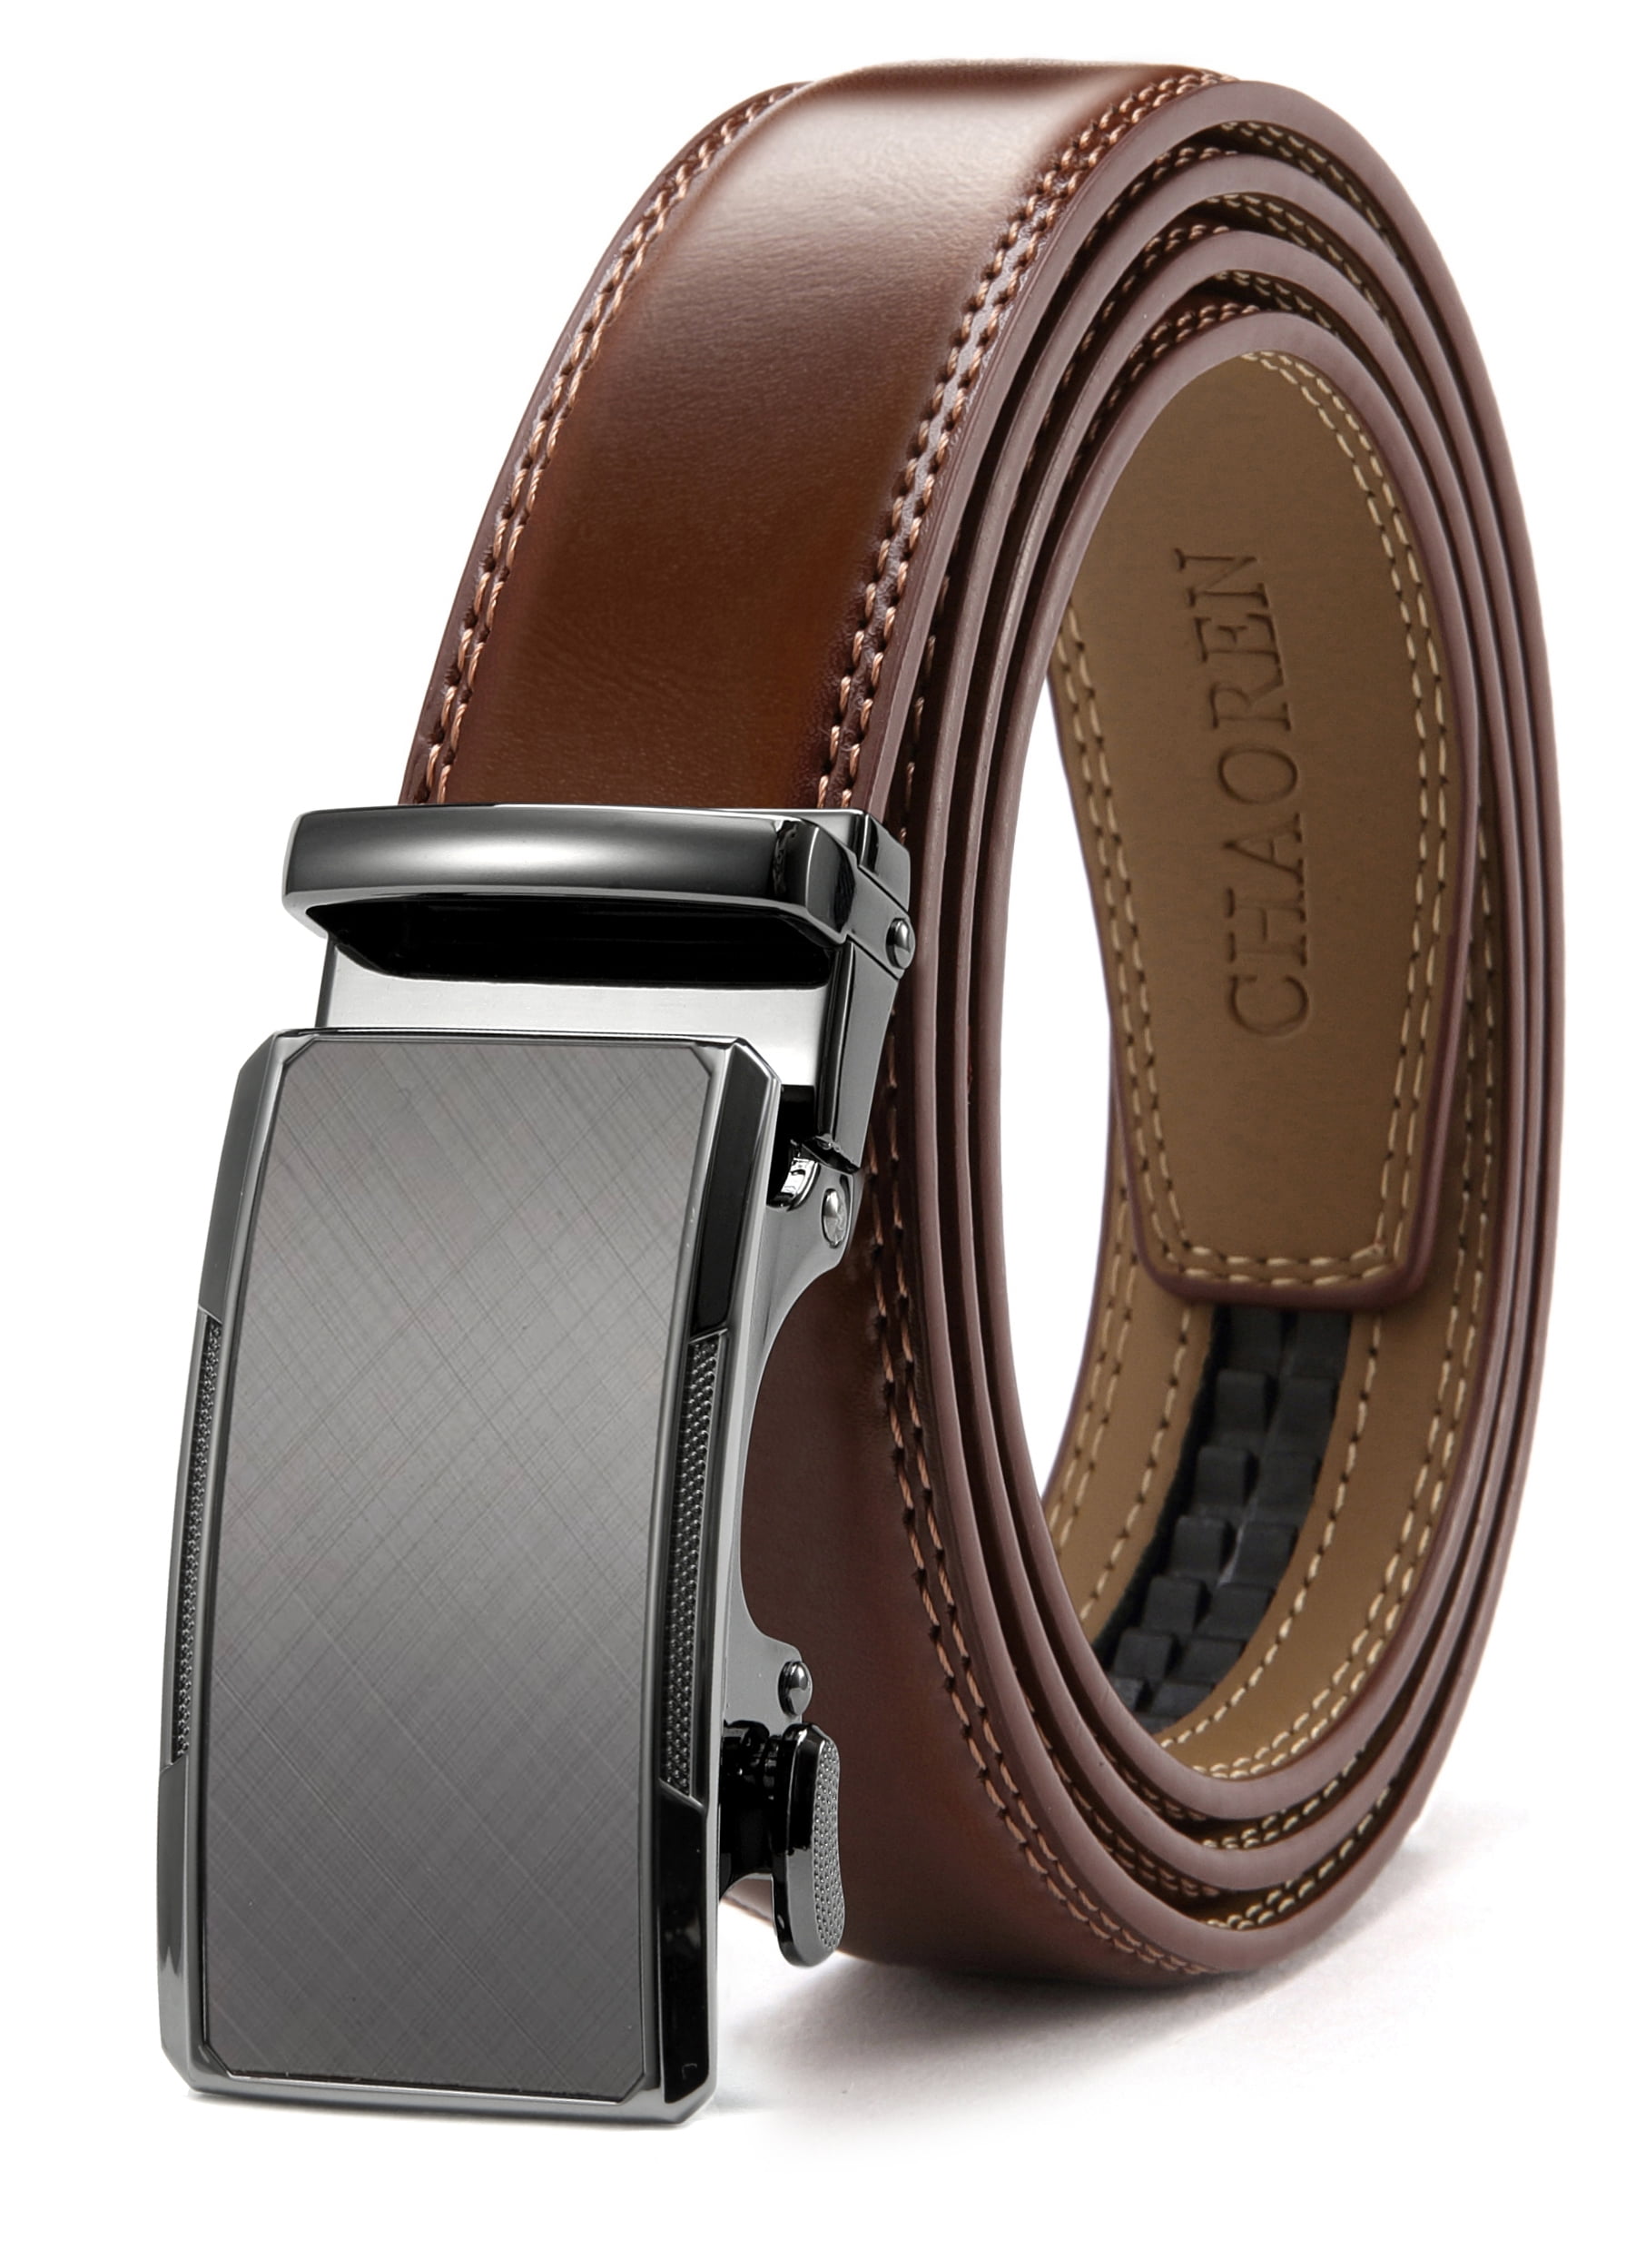 Women's belt Leather Dress Belt Click Comfort Automatic Lock buckle up to 43" 